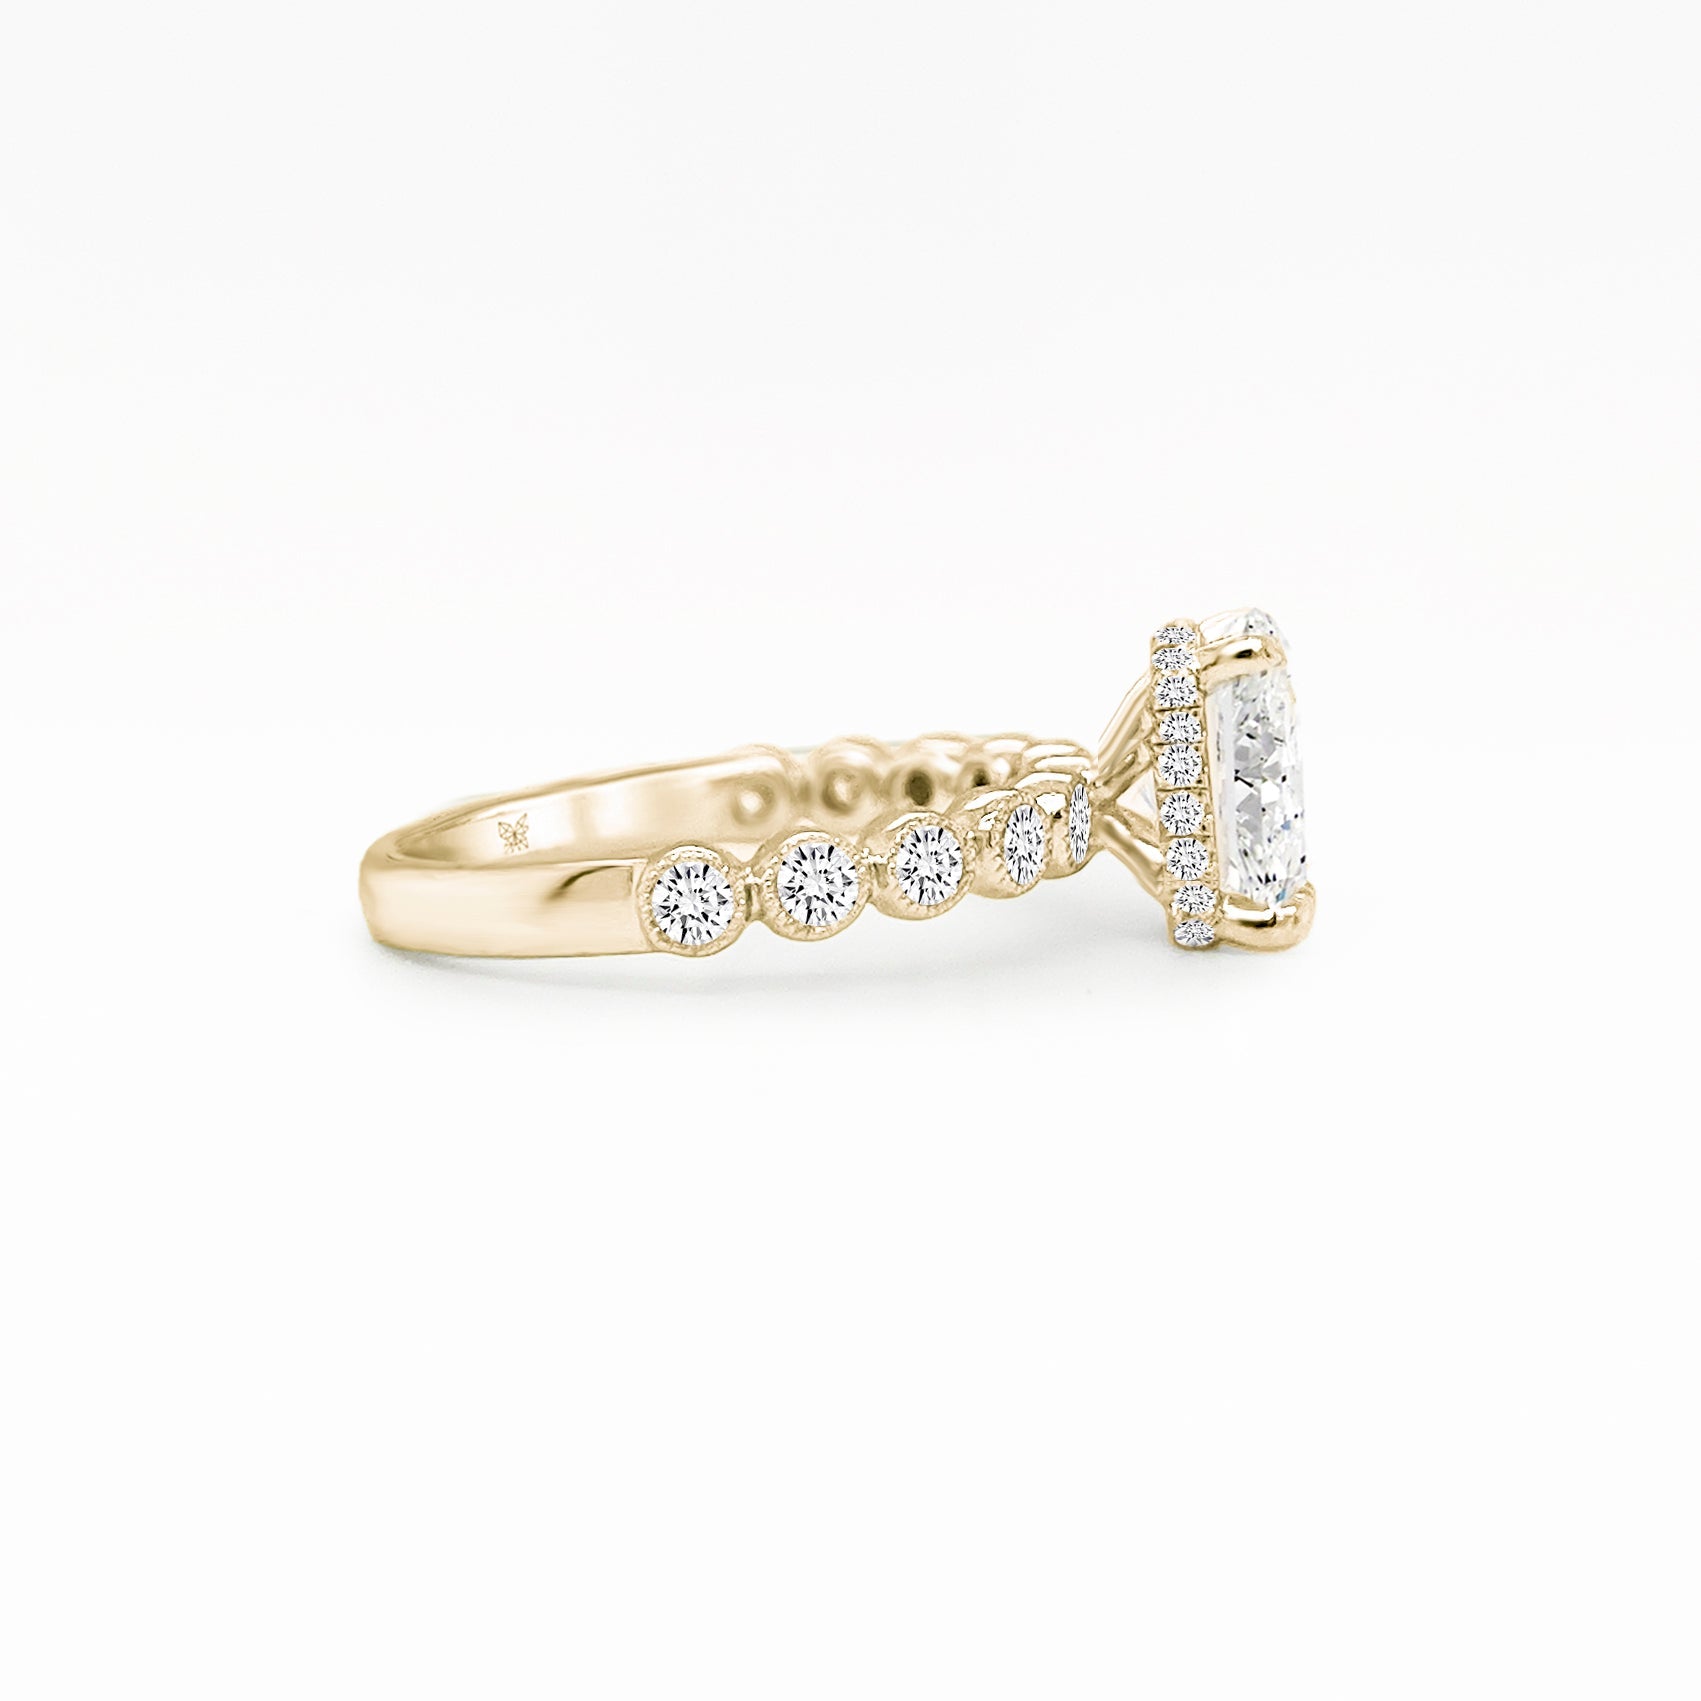 Delphine Engagement Ring